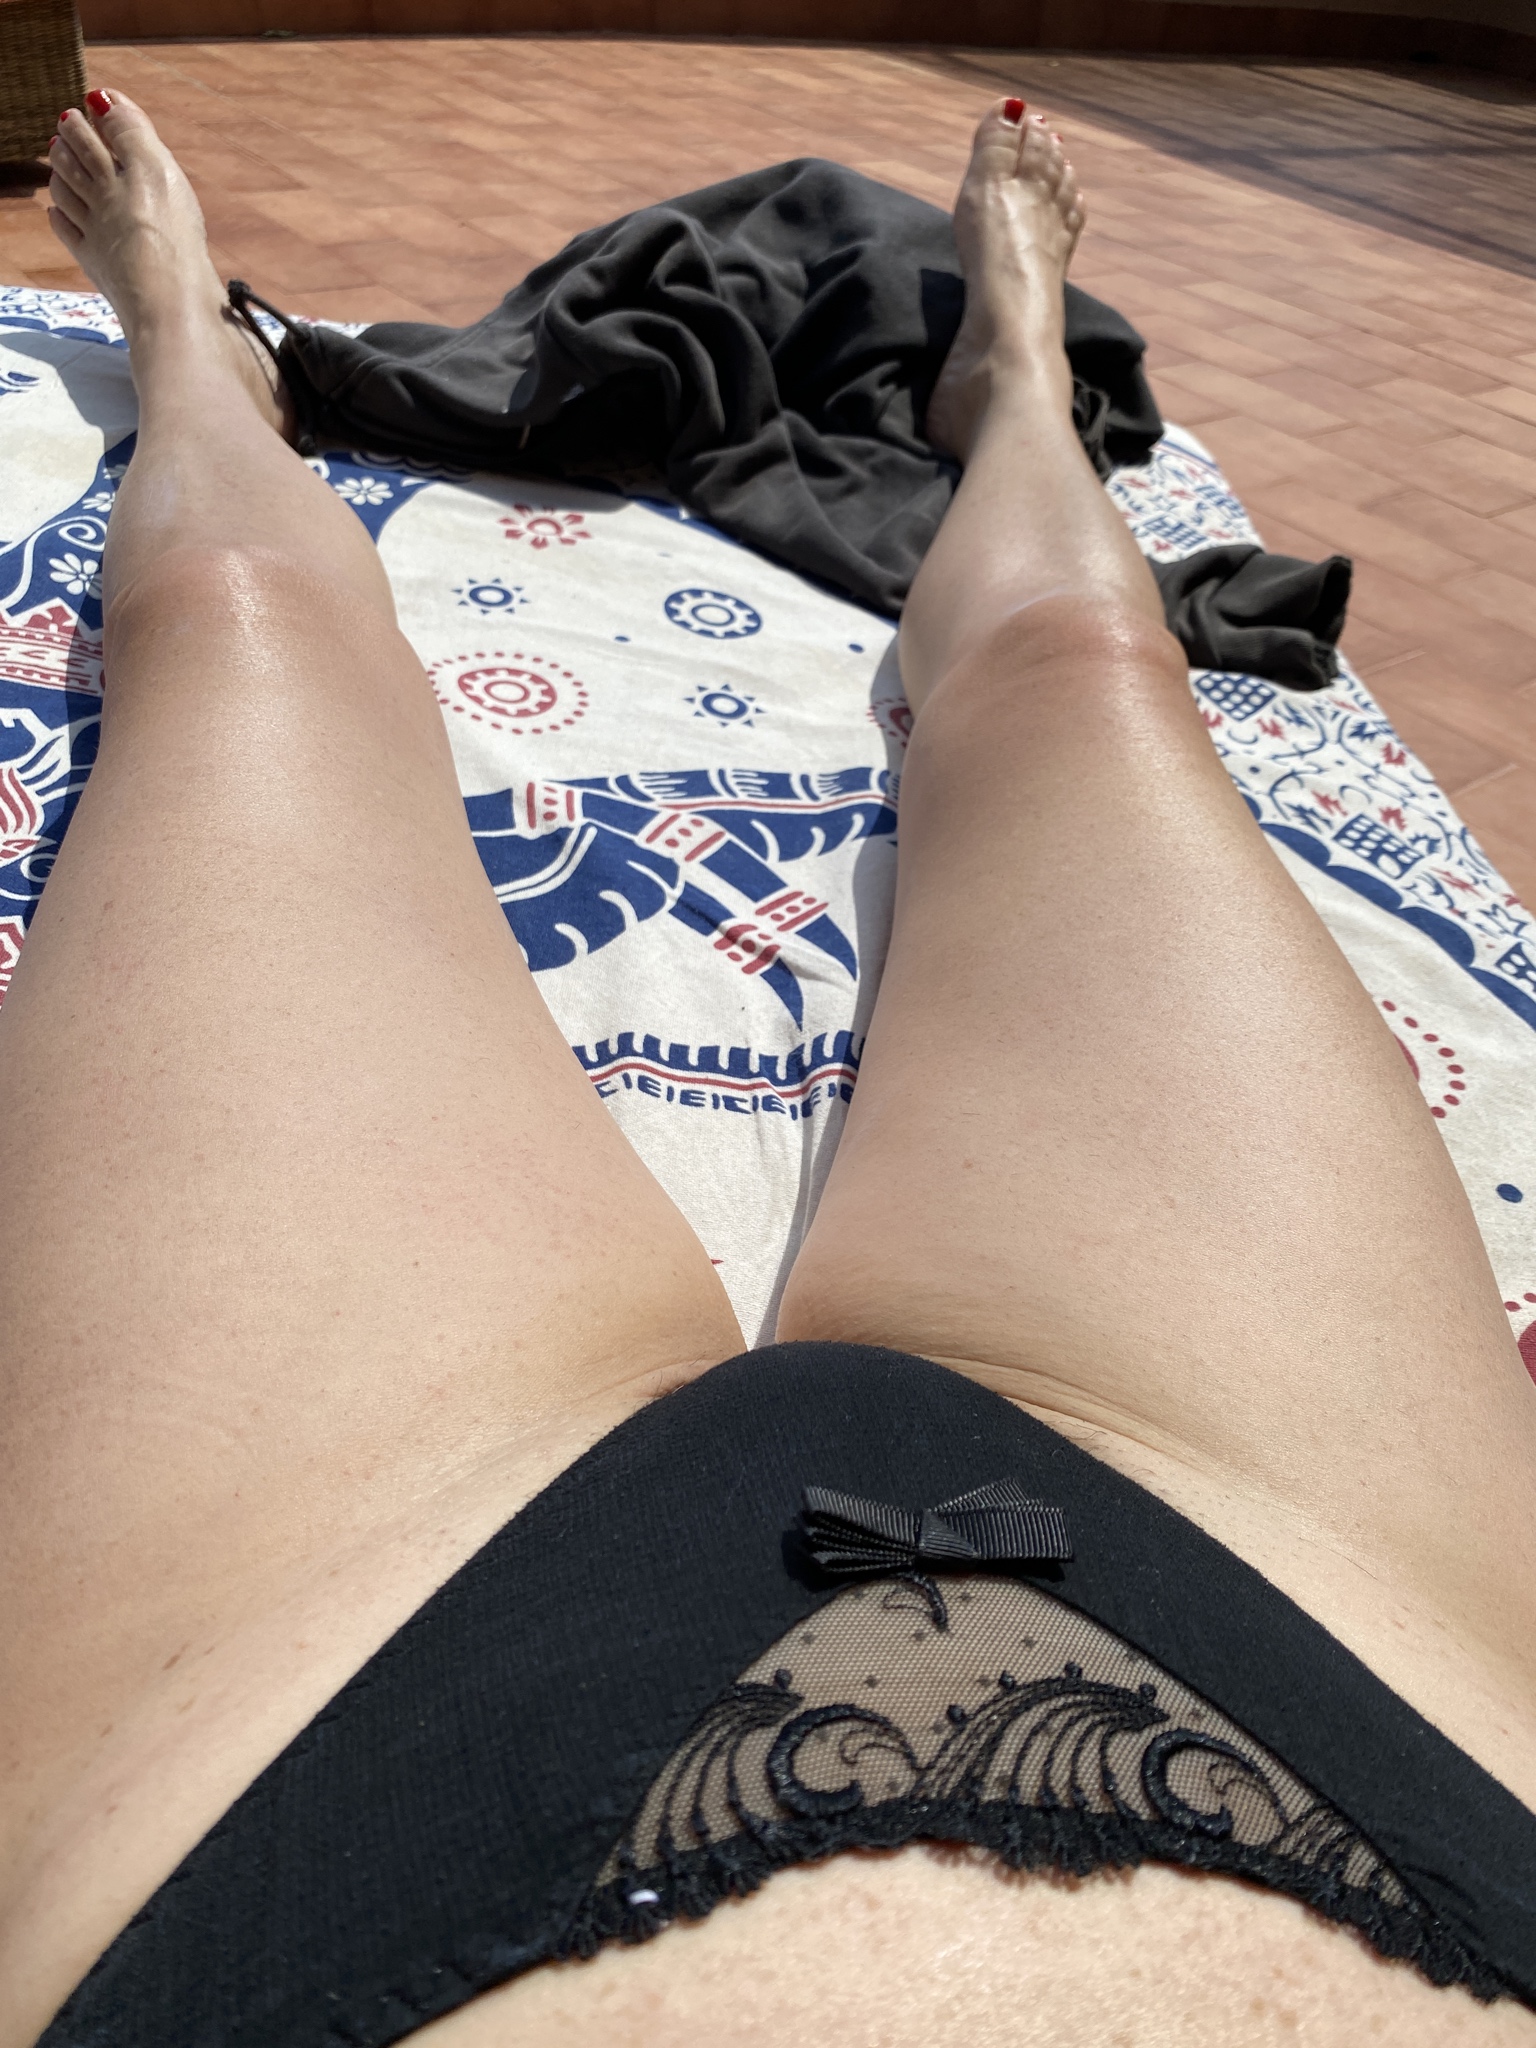 Is it weird if I sunbathe in my underwear? I get all kind of frisky when I do it